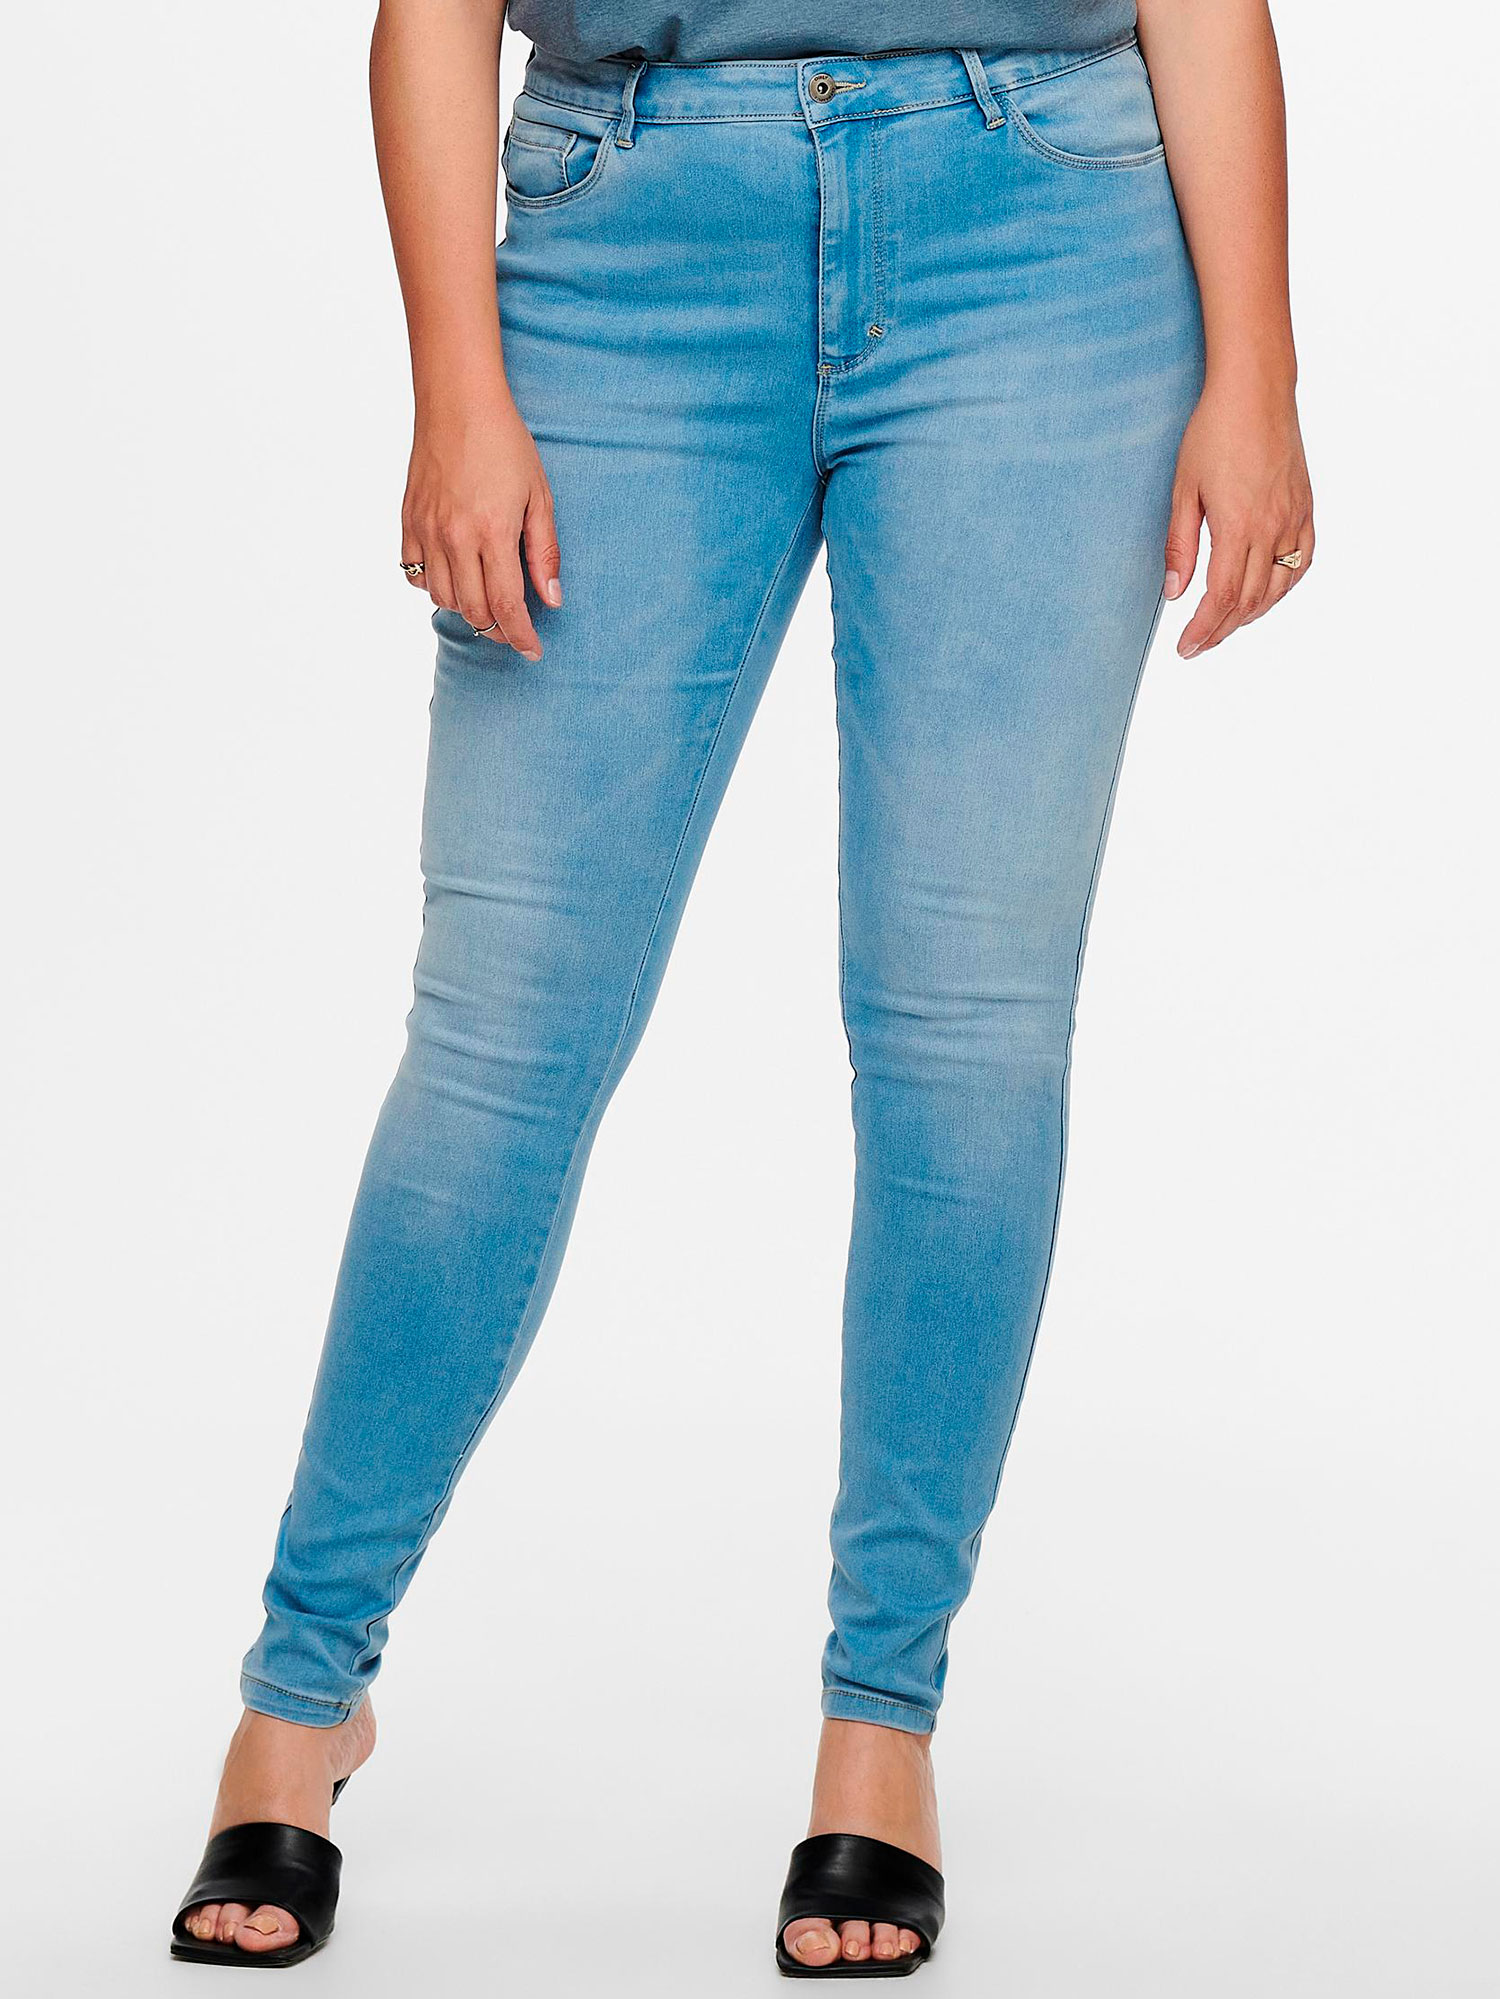 AUGUSTA - Lyseblå jeans med benlengde 32 fra Only Carmakoma